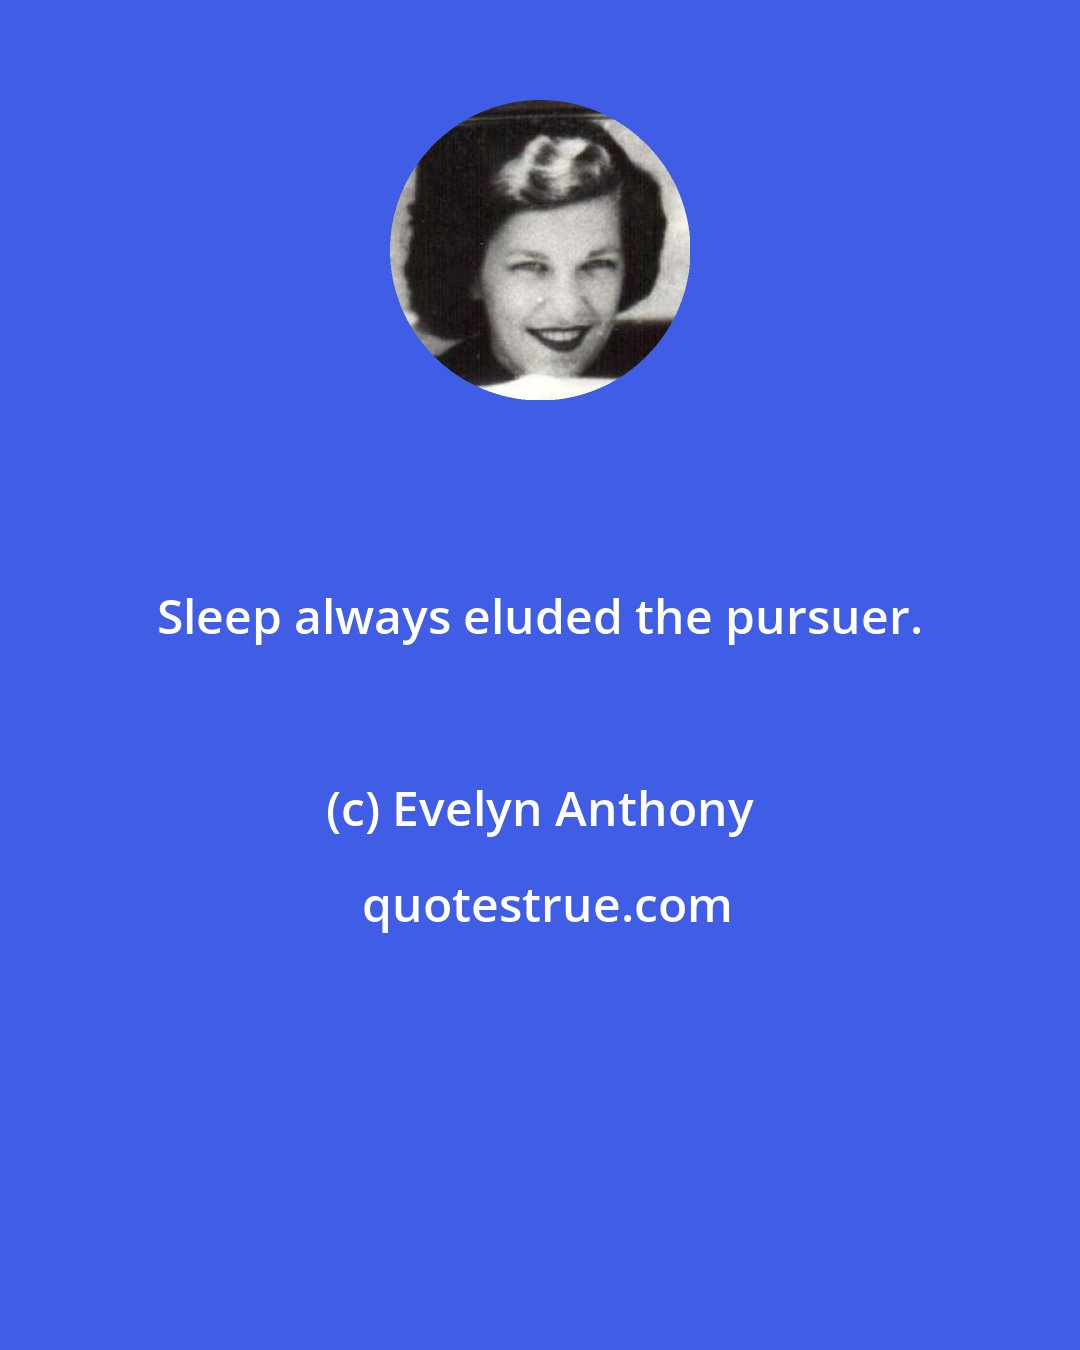 Evelyn Anthony: Sleep always eluded the pursuer.